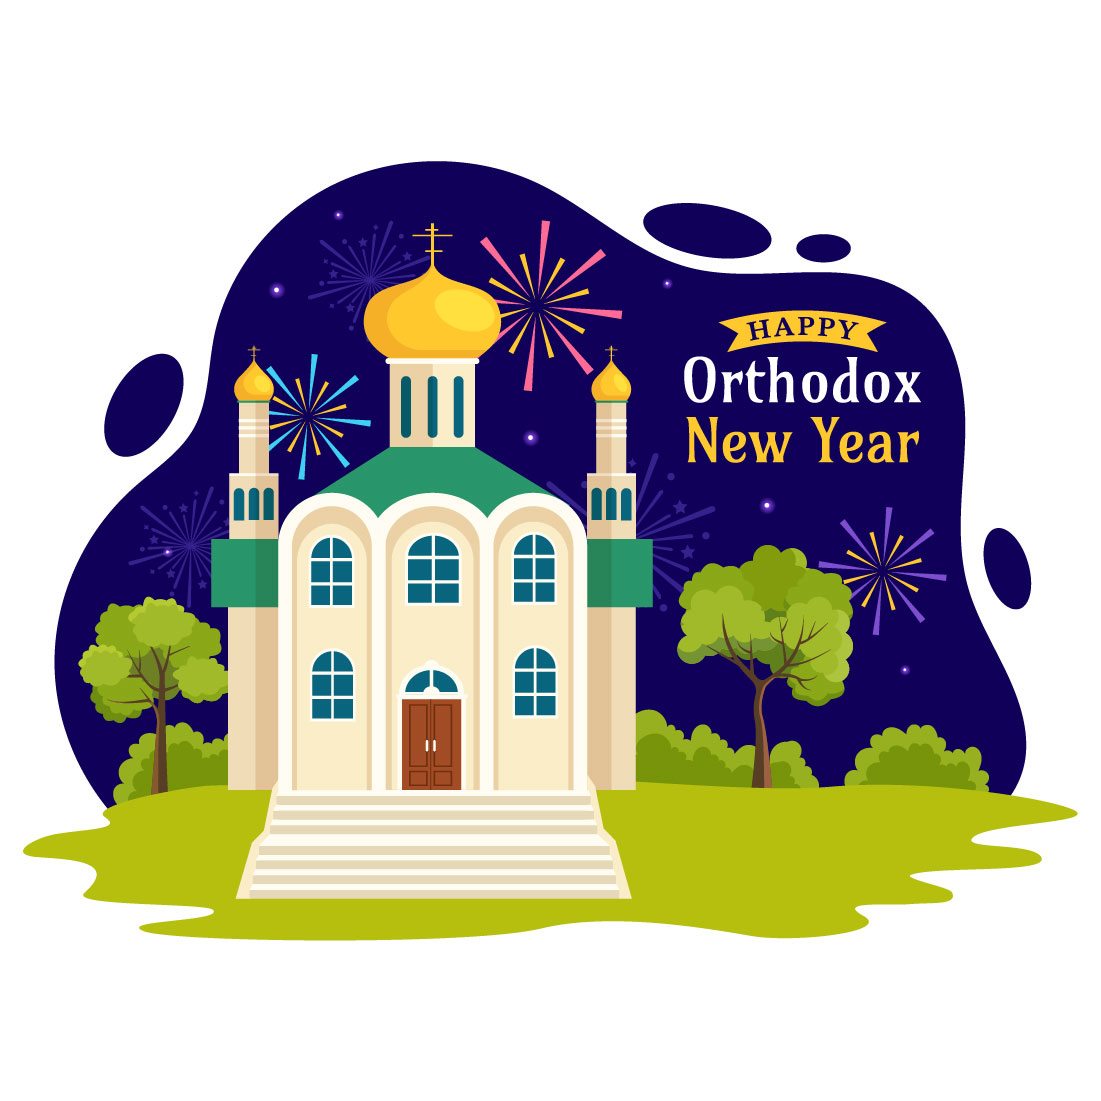 12 Happy Orthodox New Year Illustration cover image.